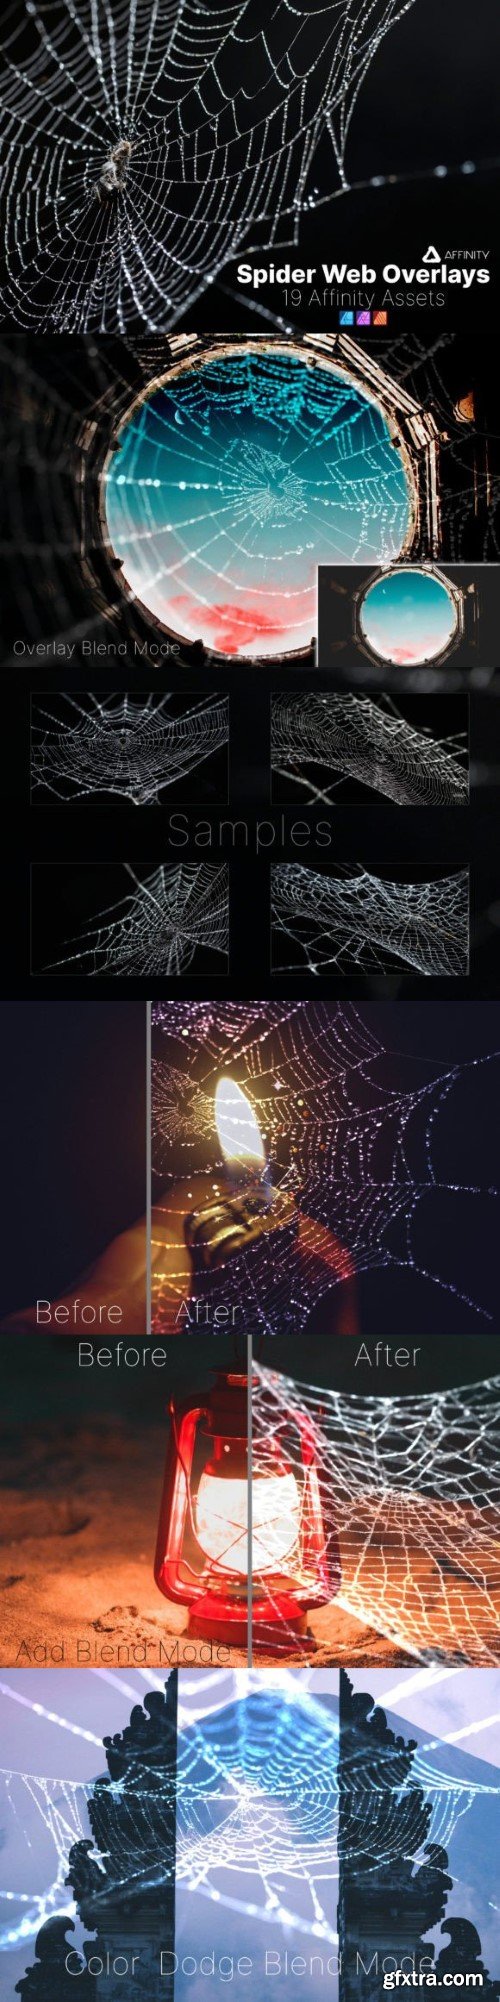 Affinity Assets | Spider Web Overlays